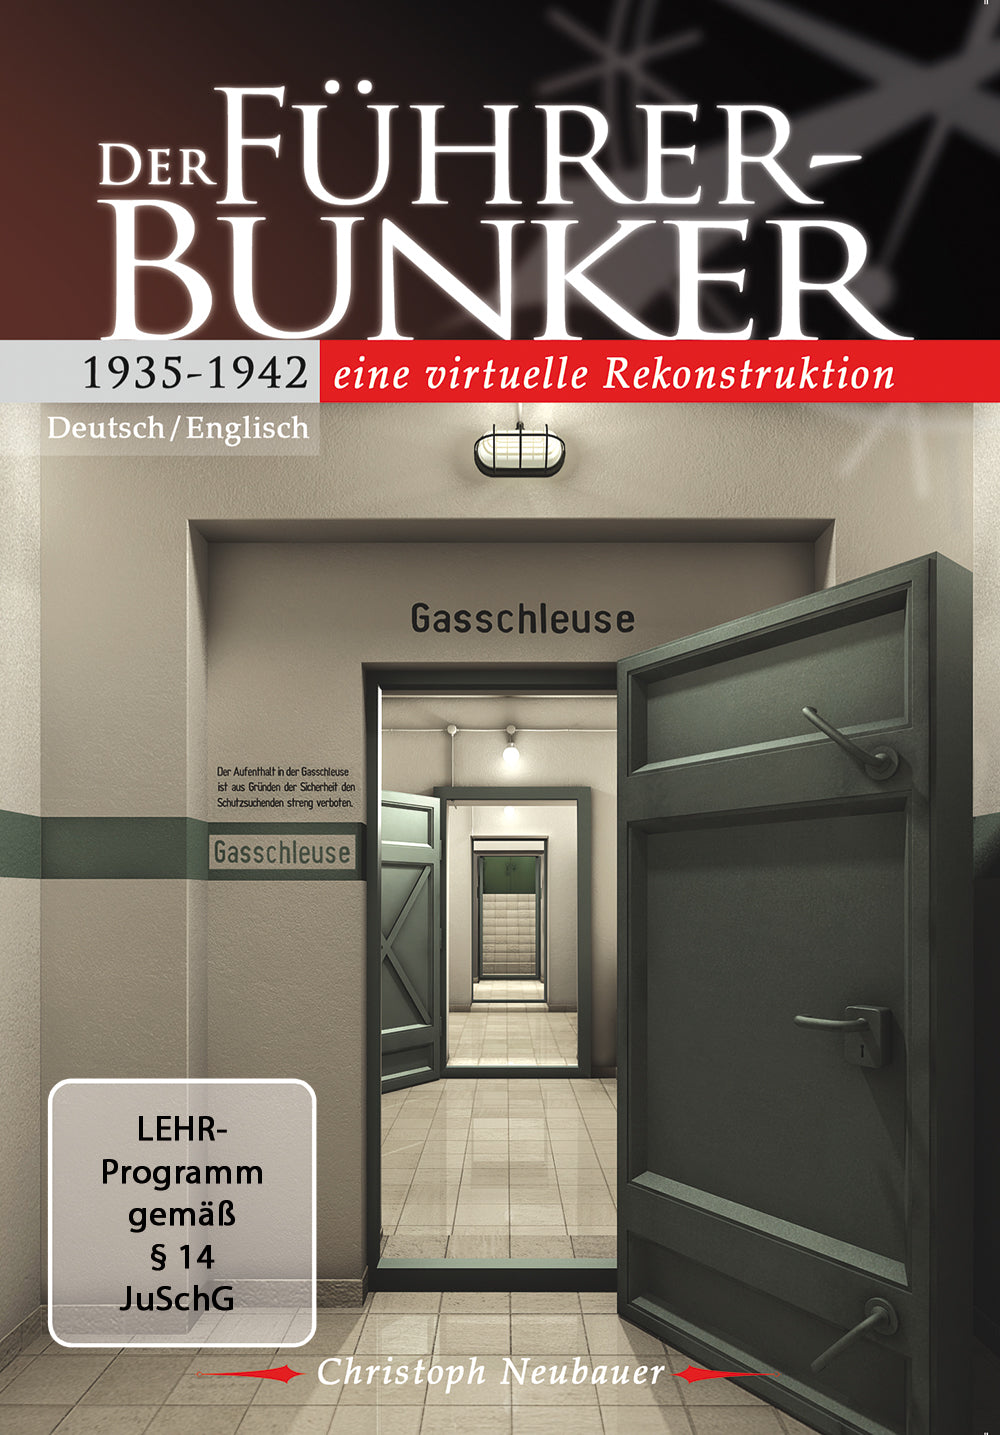 DVD "Der Führerbunker (1935-1942)" (German/English)